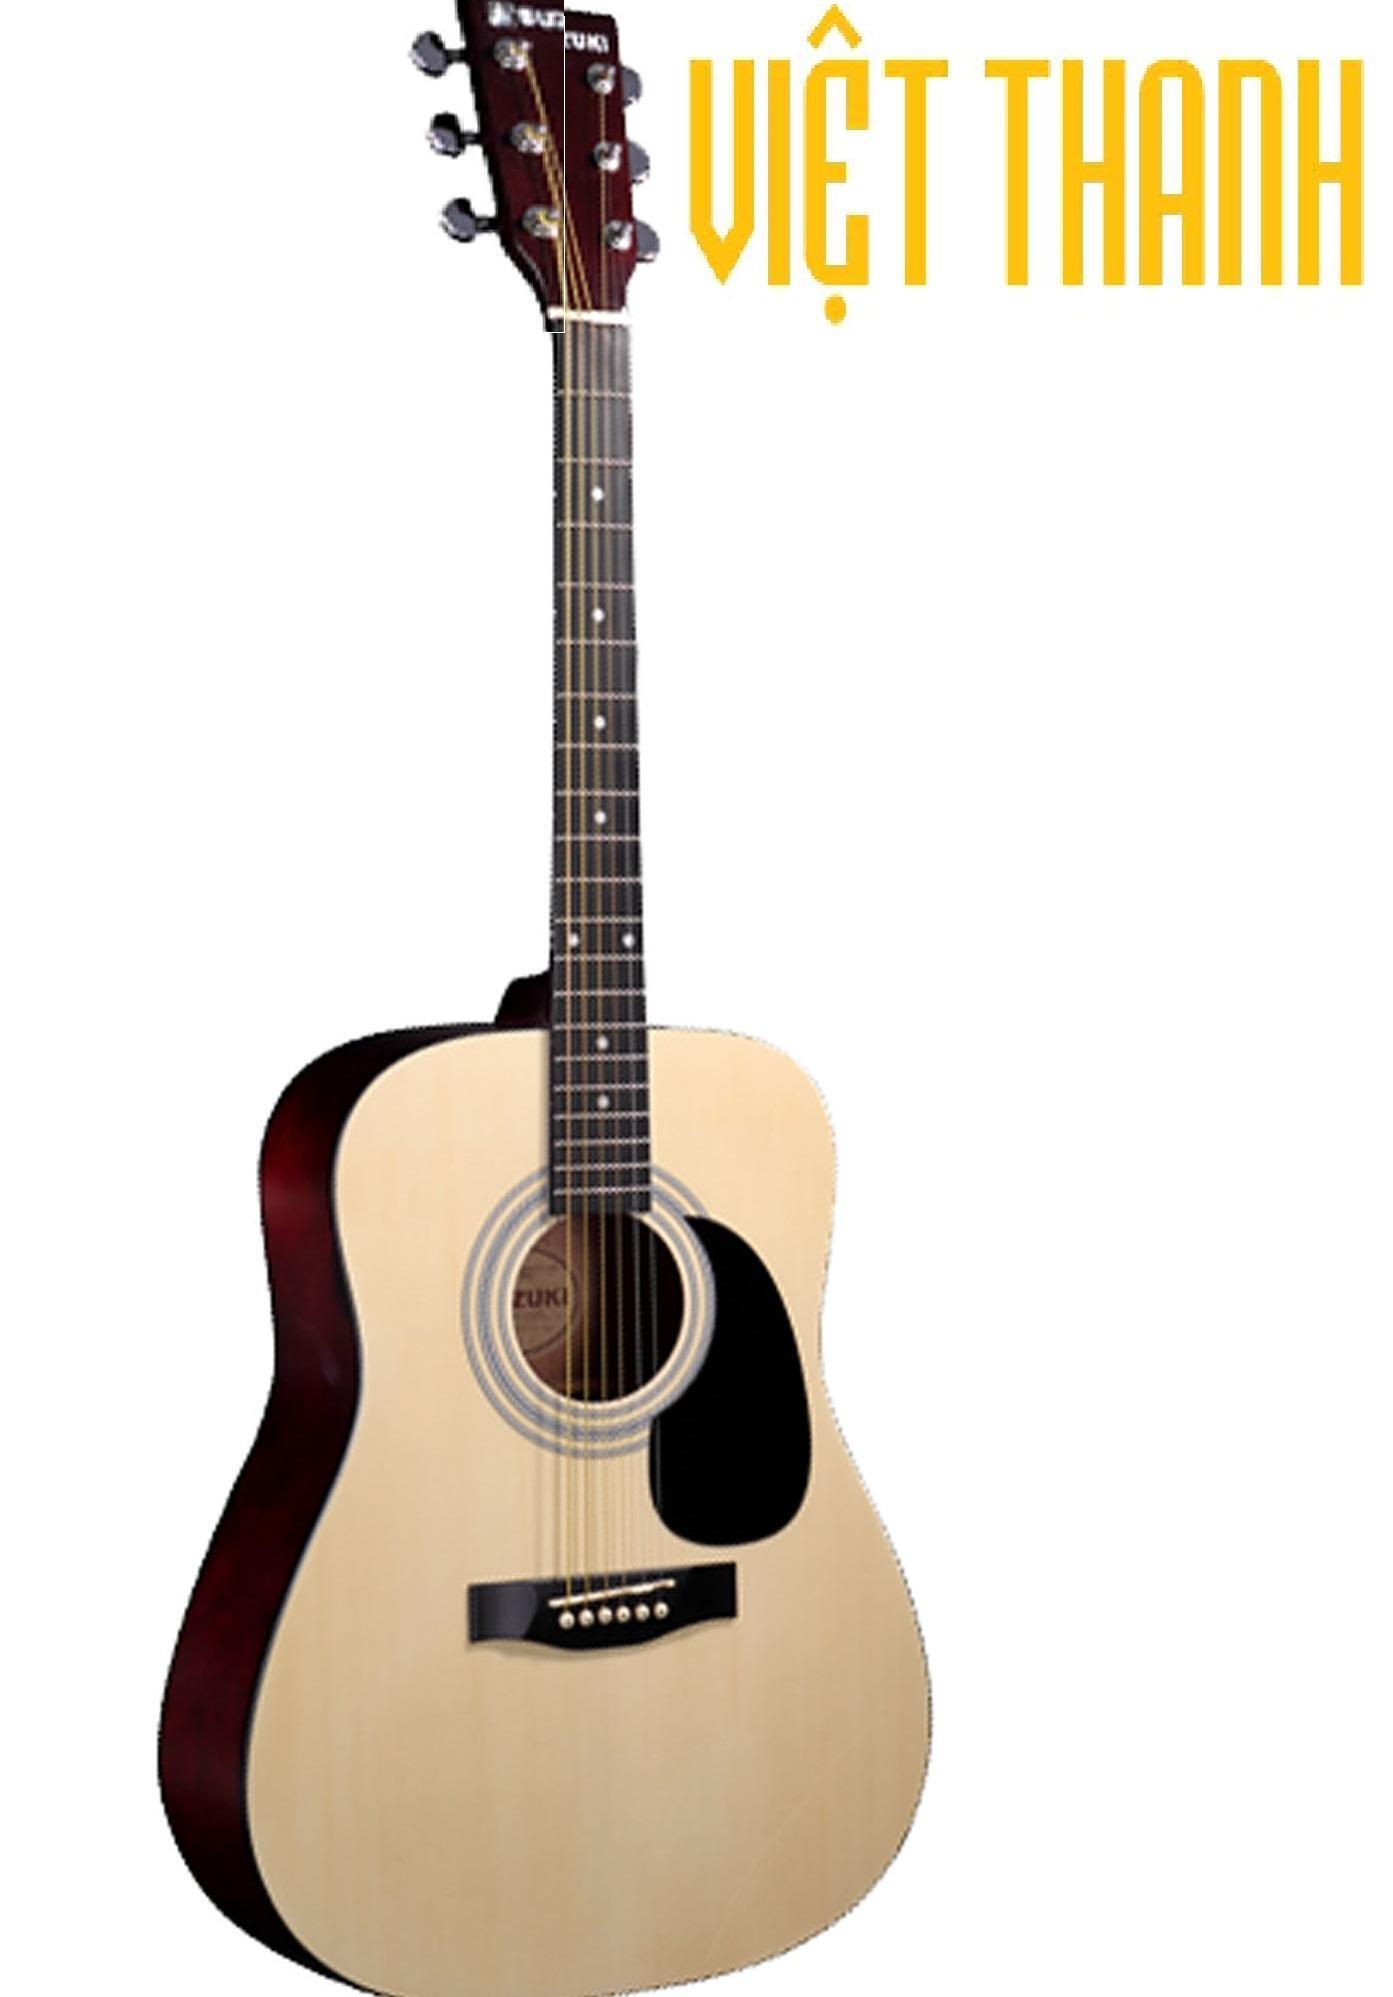 Đàn guitar Acoustic Suzuki SDG-6NL